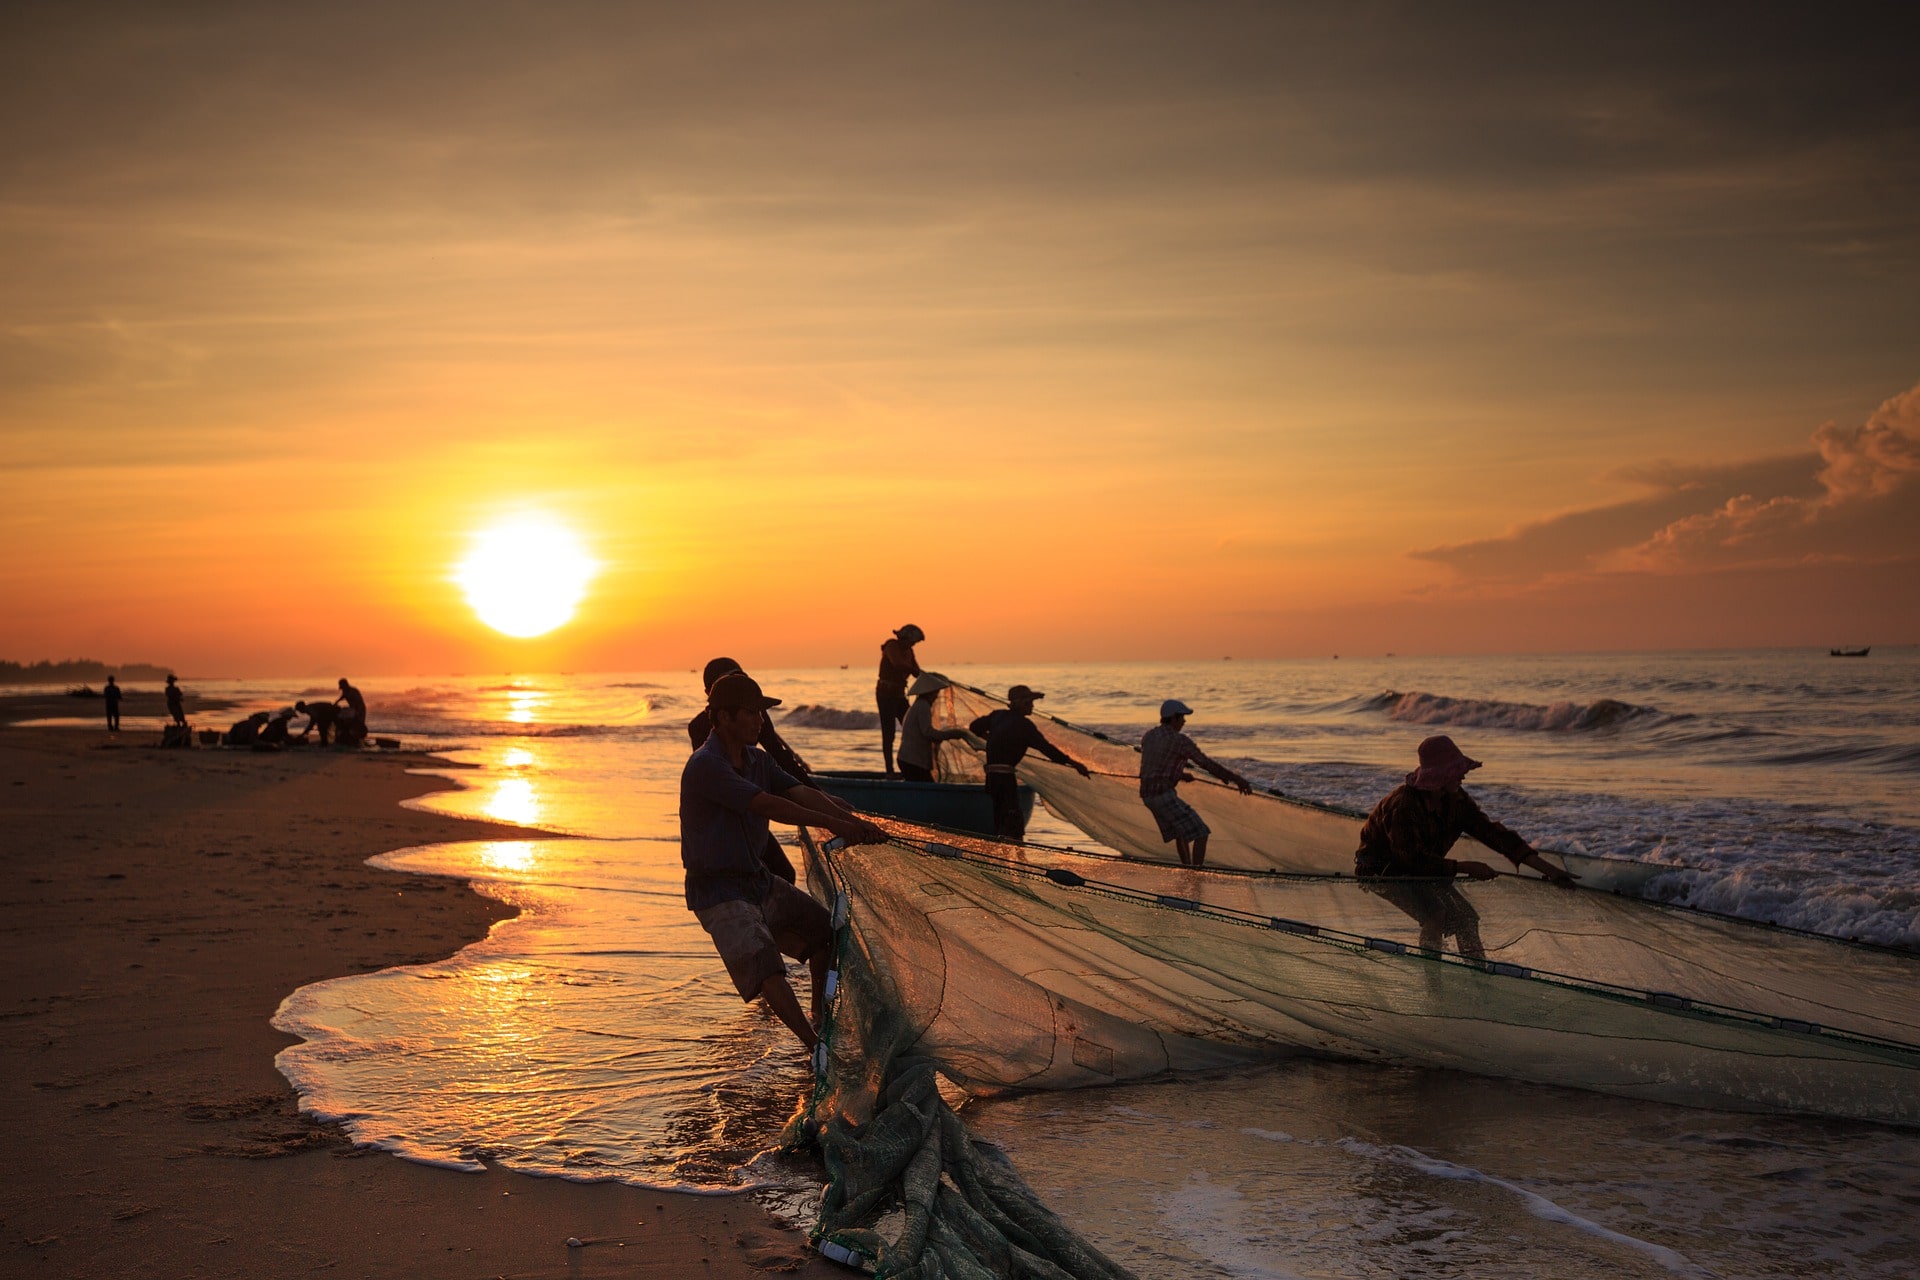 Photo of fishermen pulling together